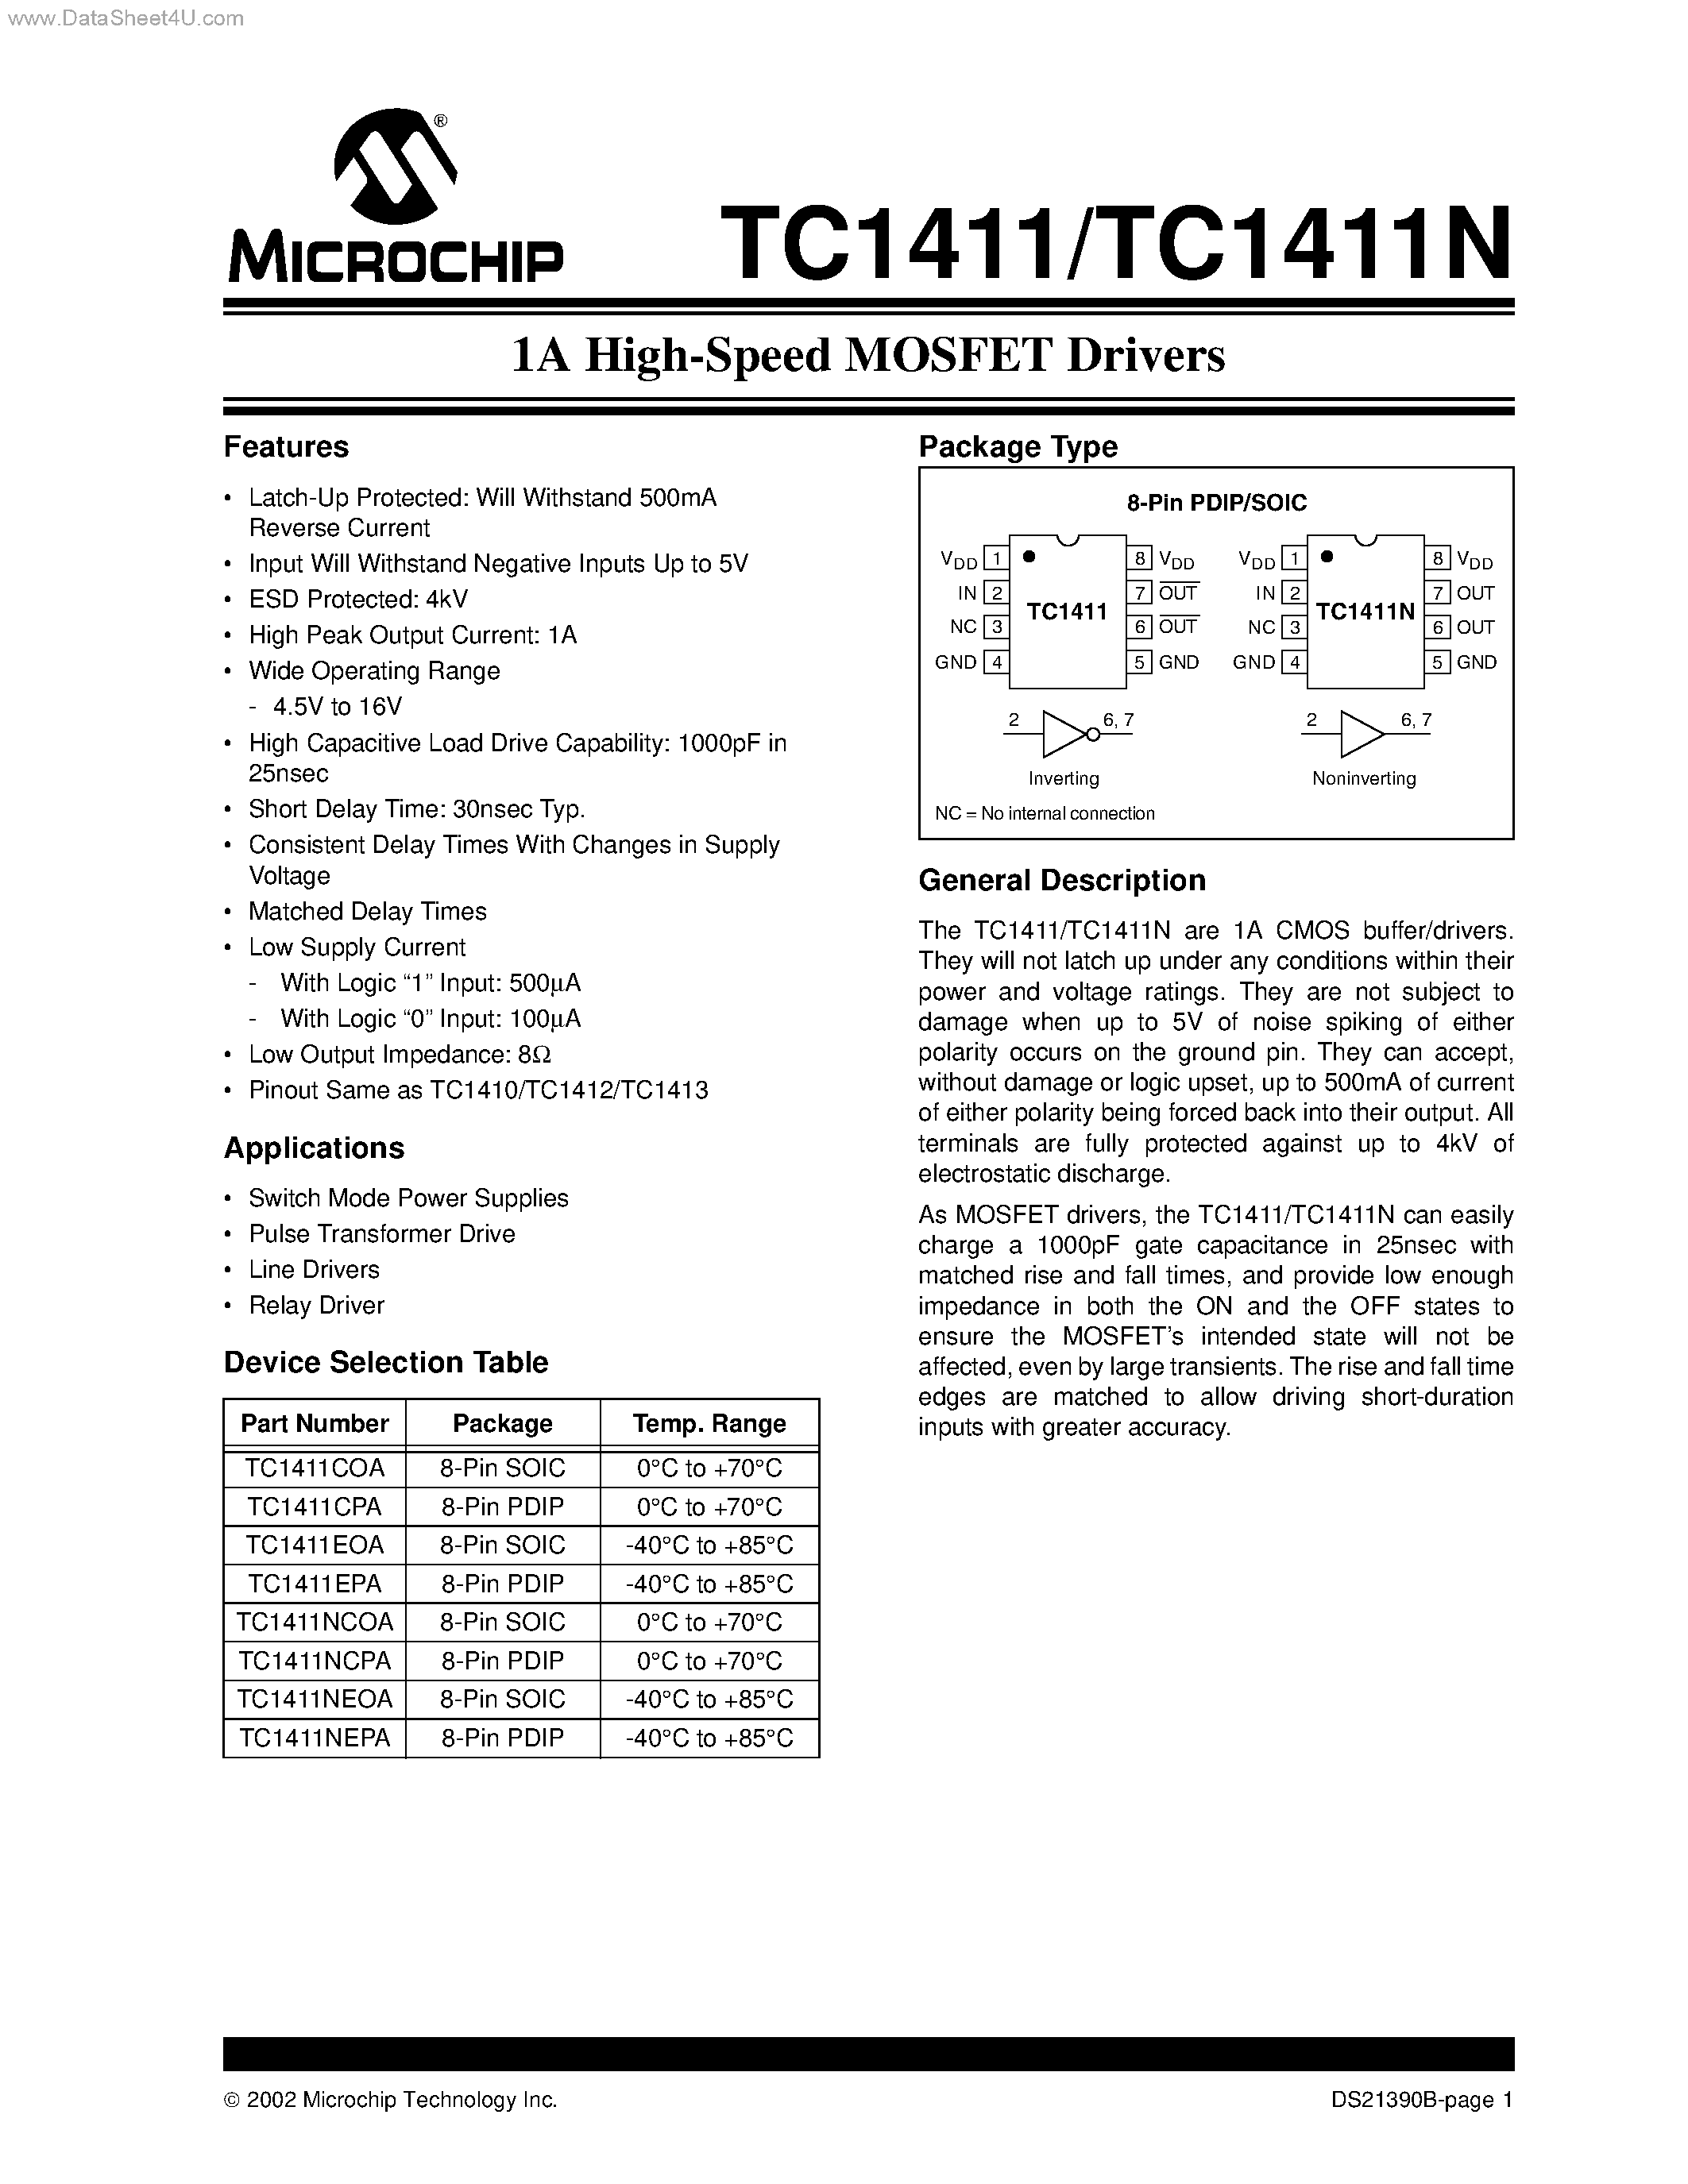 Даташит TC1411 - High-Speed MOSFET Drivers страница 1